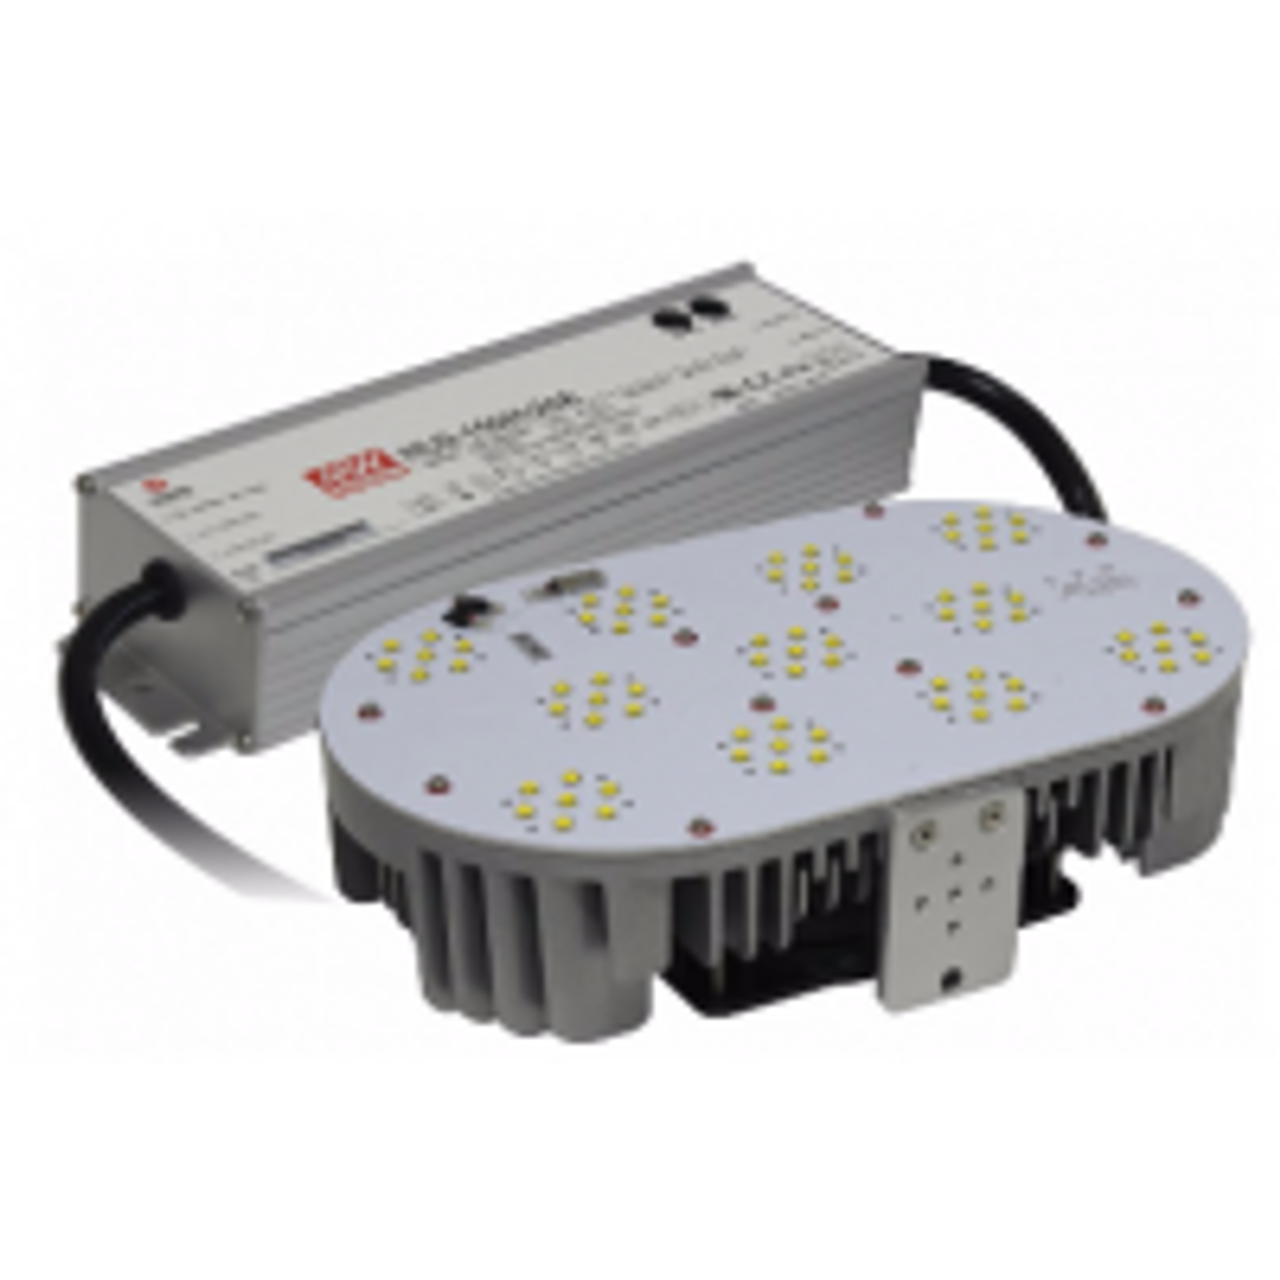 LED Retrofit Kit, 150 Watt, 24000 Lumens, 600W MH Equal, 5000K